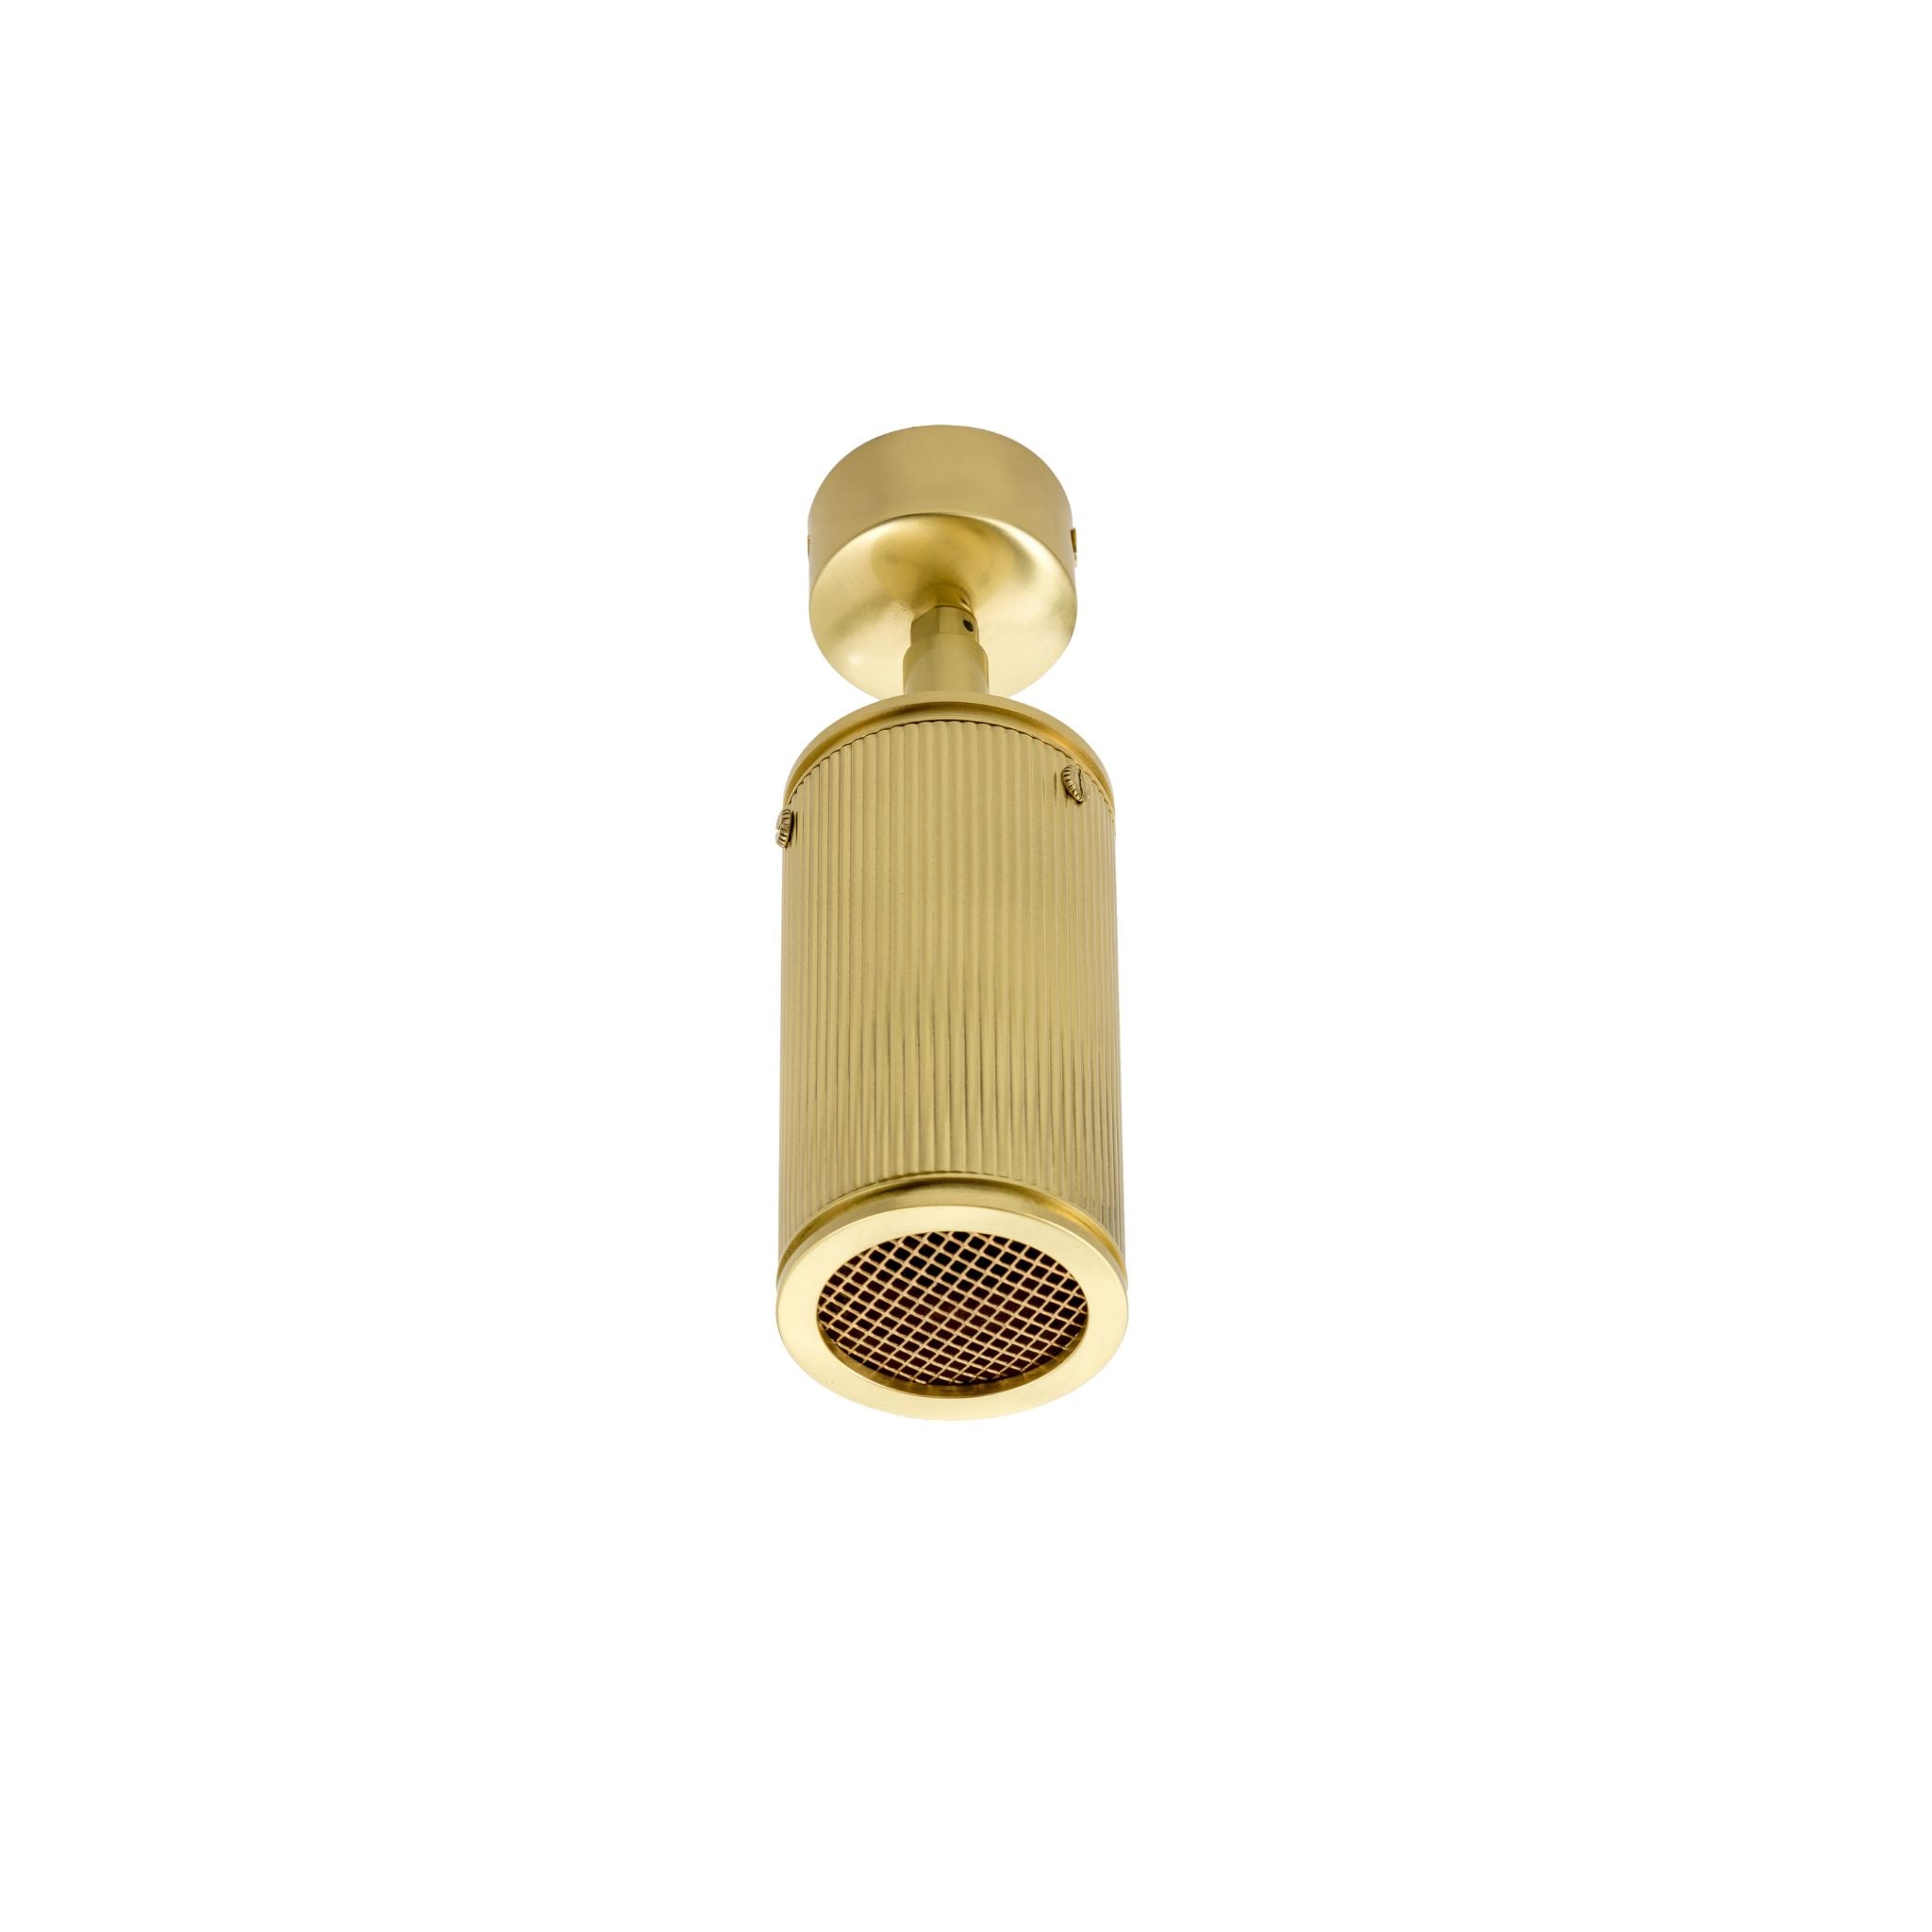 Urban brass ribbed cylindrical spot light - ilbronzetto